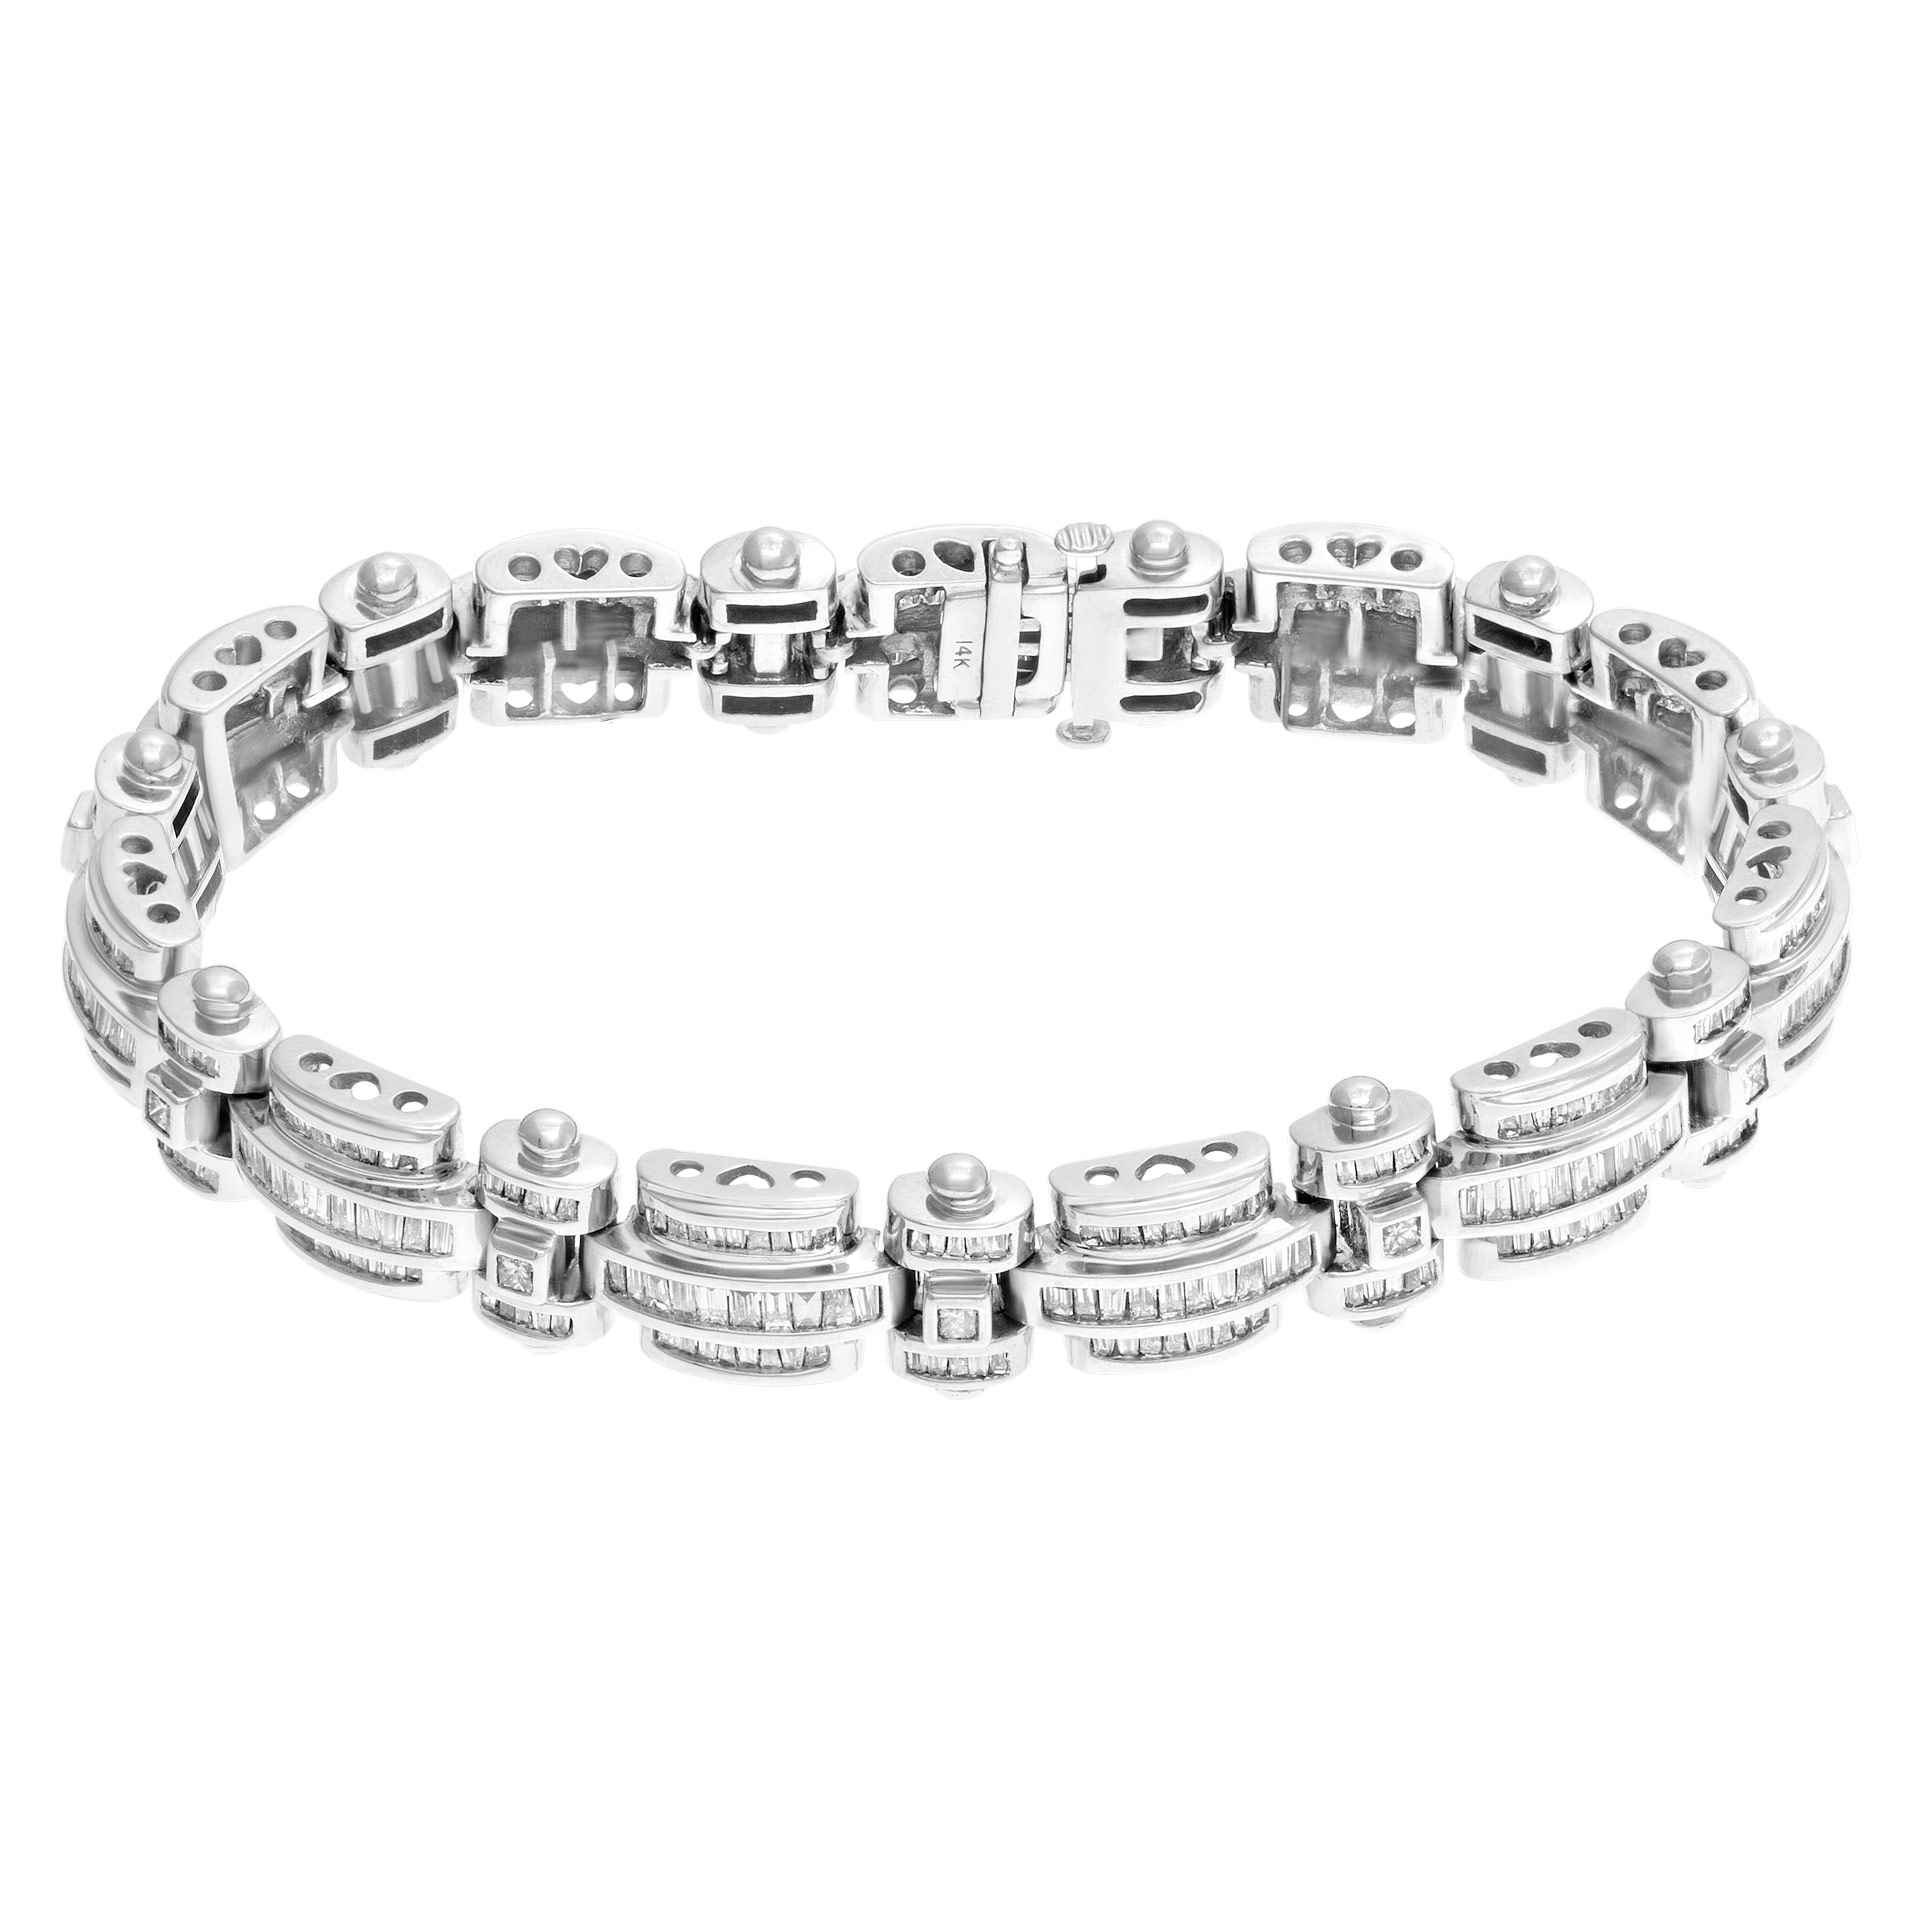 Diamond link bracelet in 14k white gold. Approximately 8.0 carats in diamonds. image 1